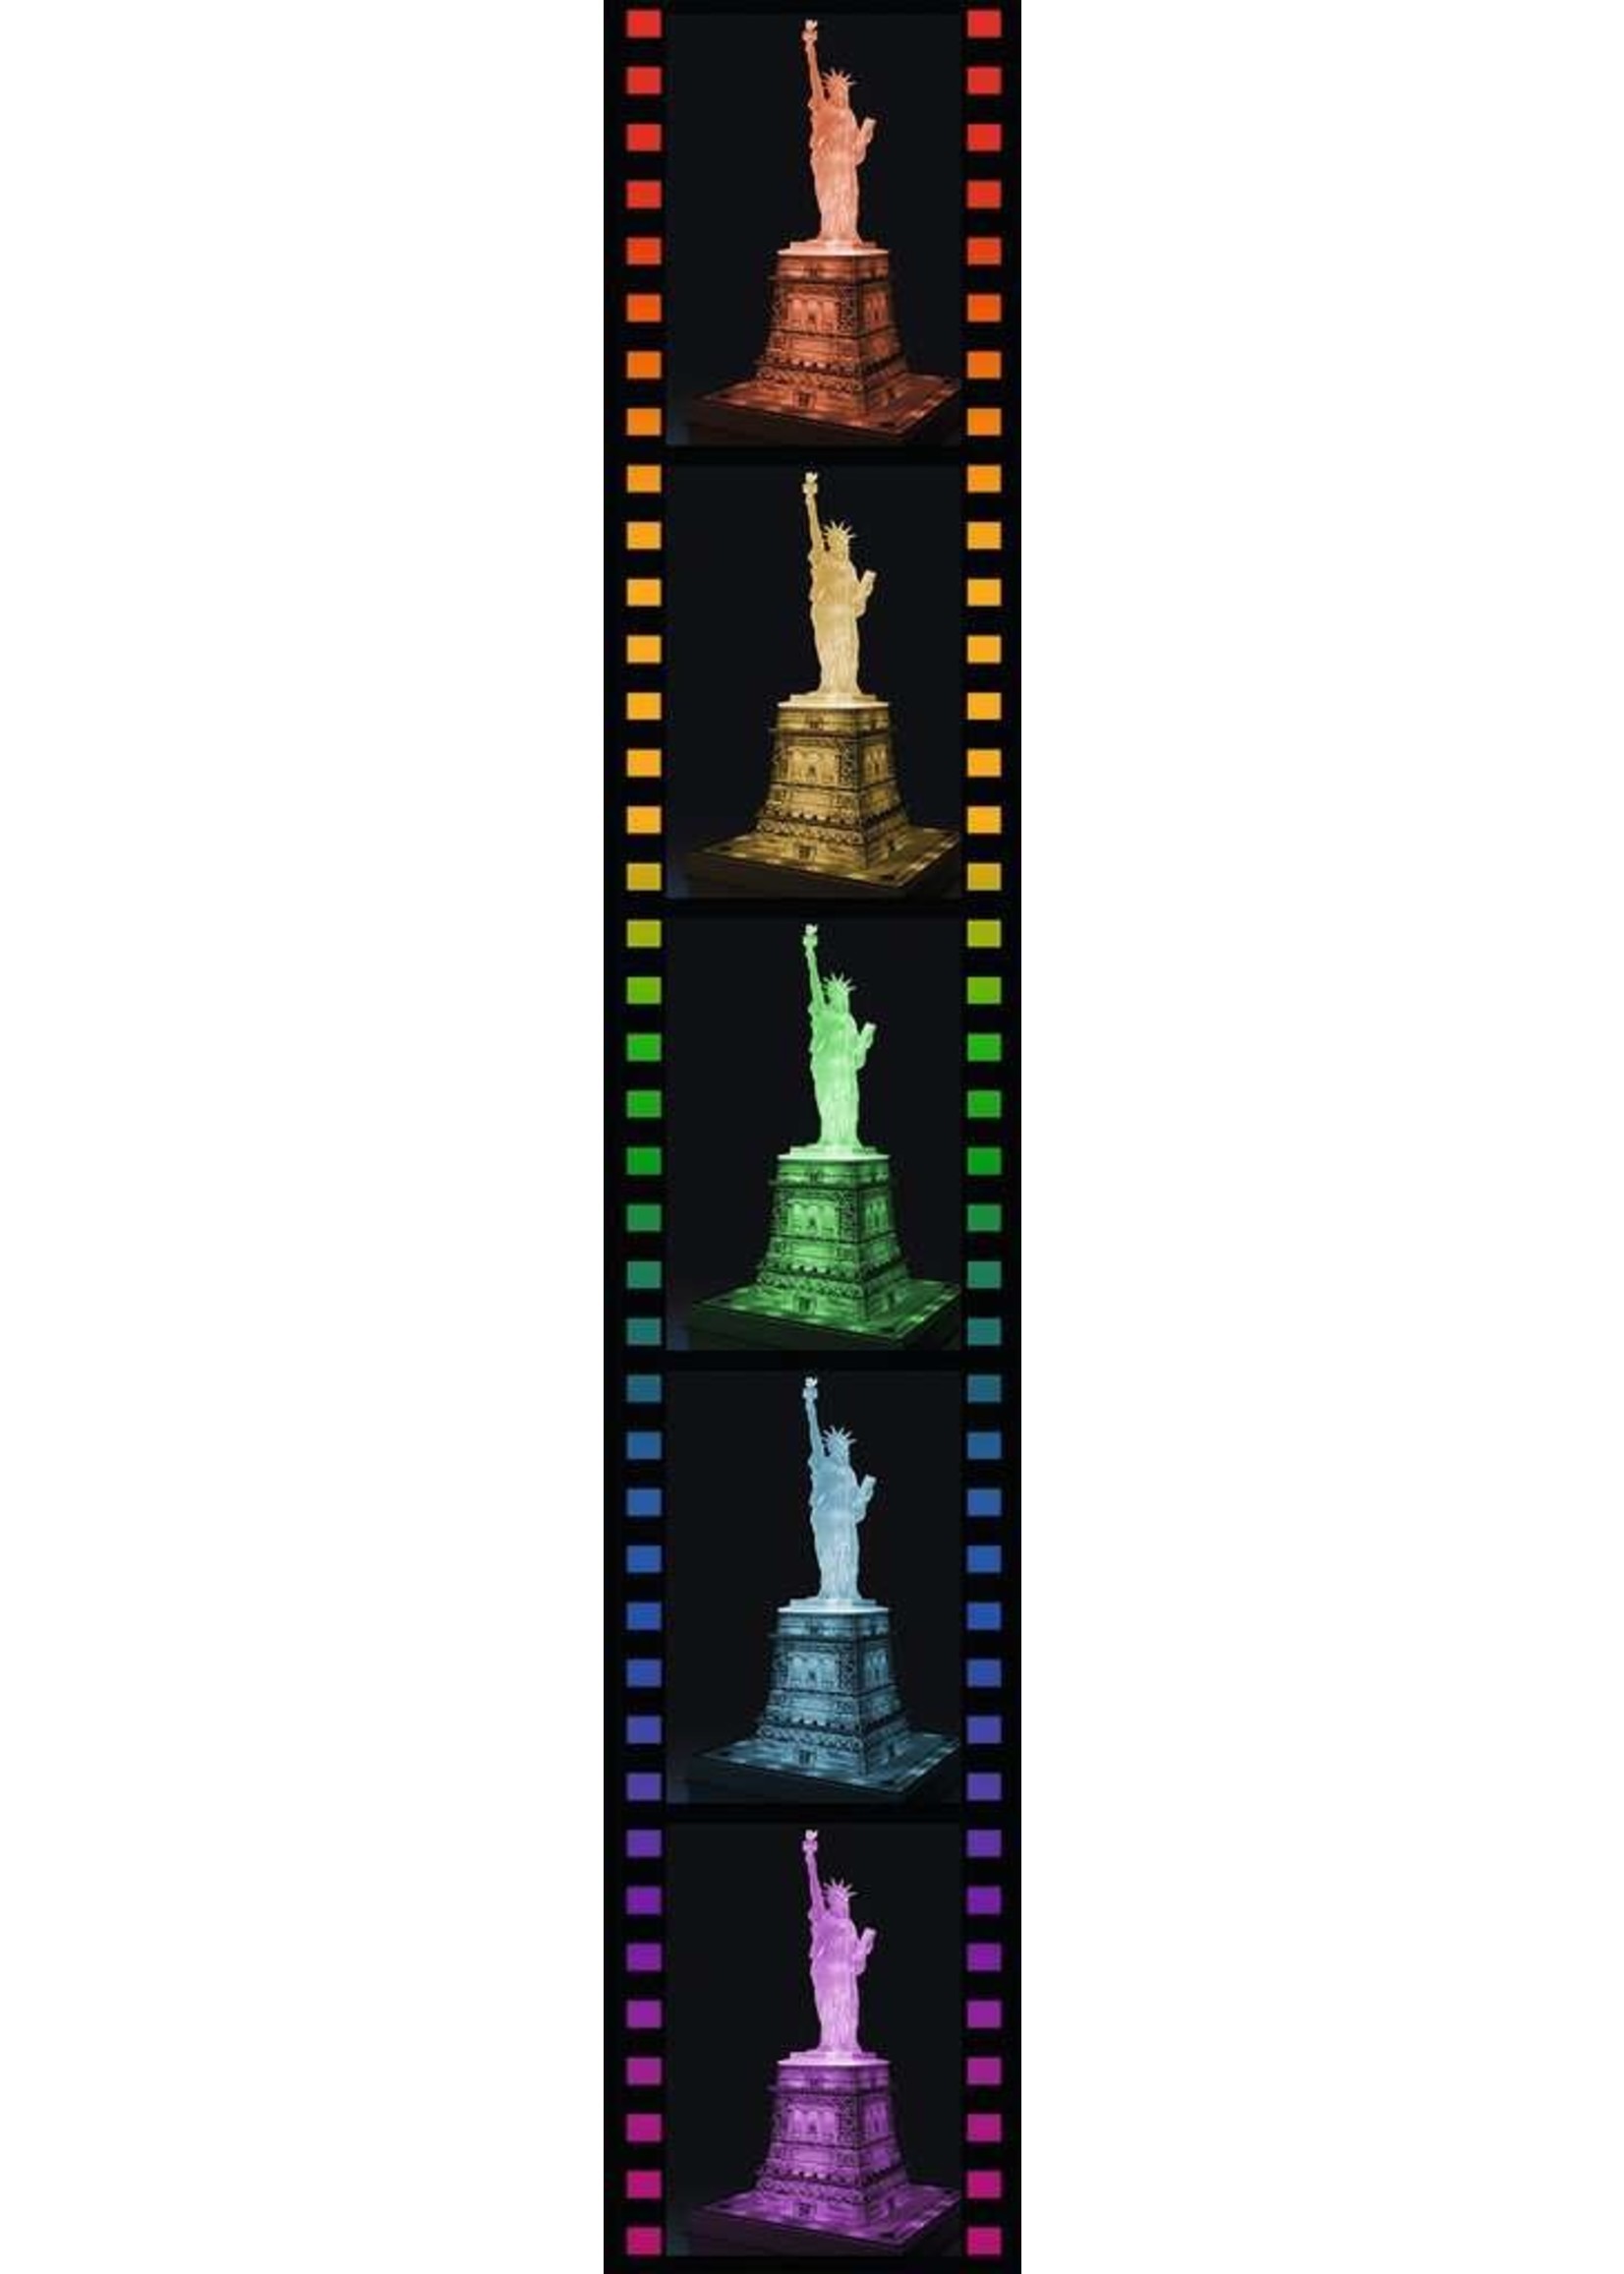 Ravensburger Statue Of Liberty-Night Ed 3D